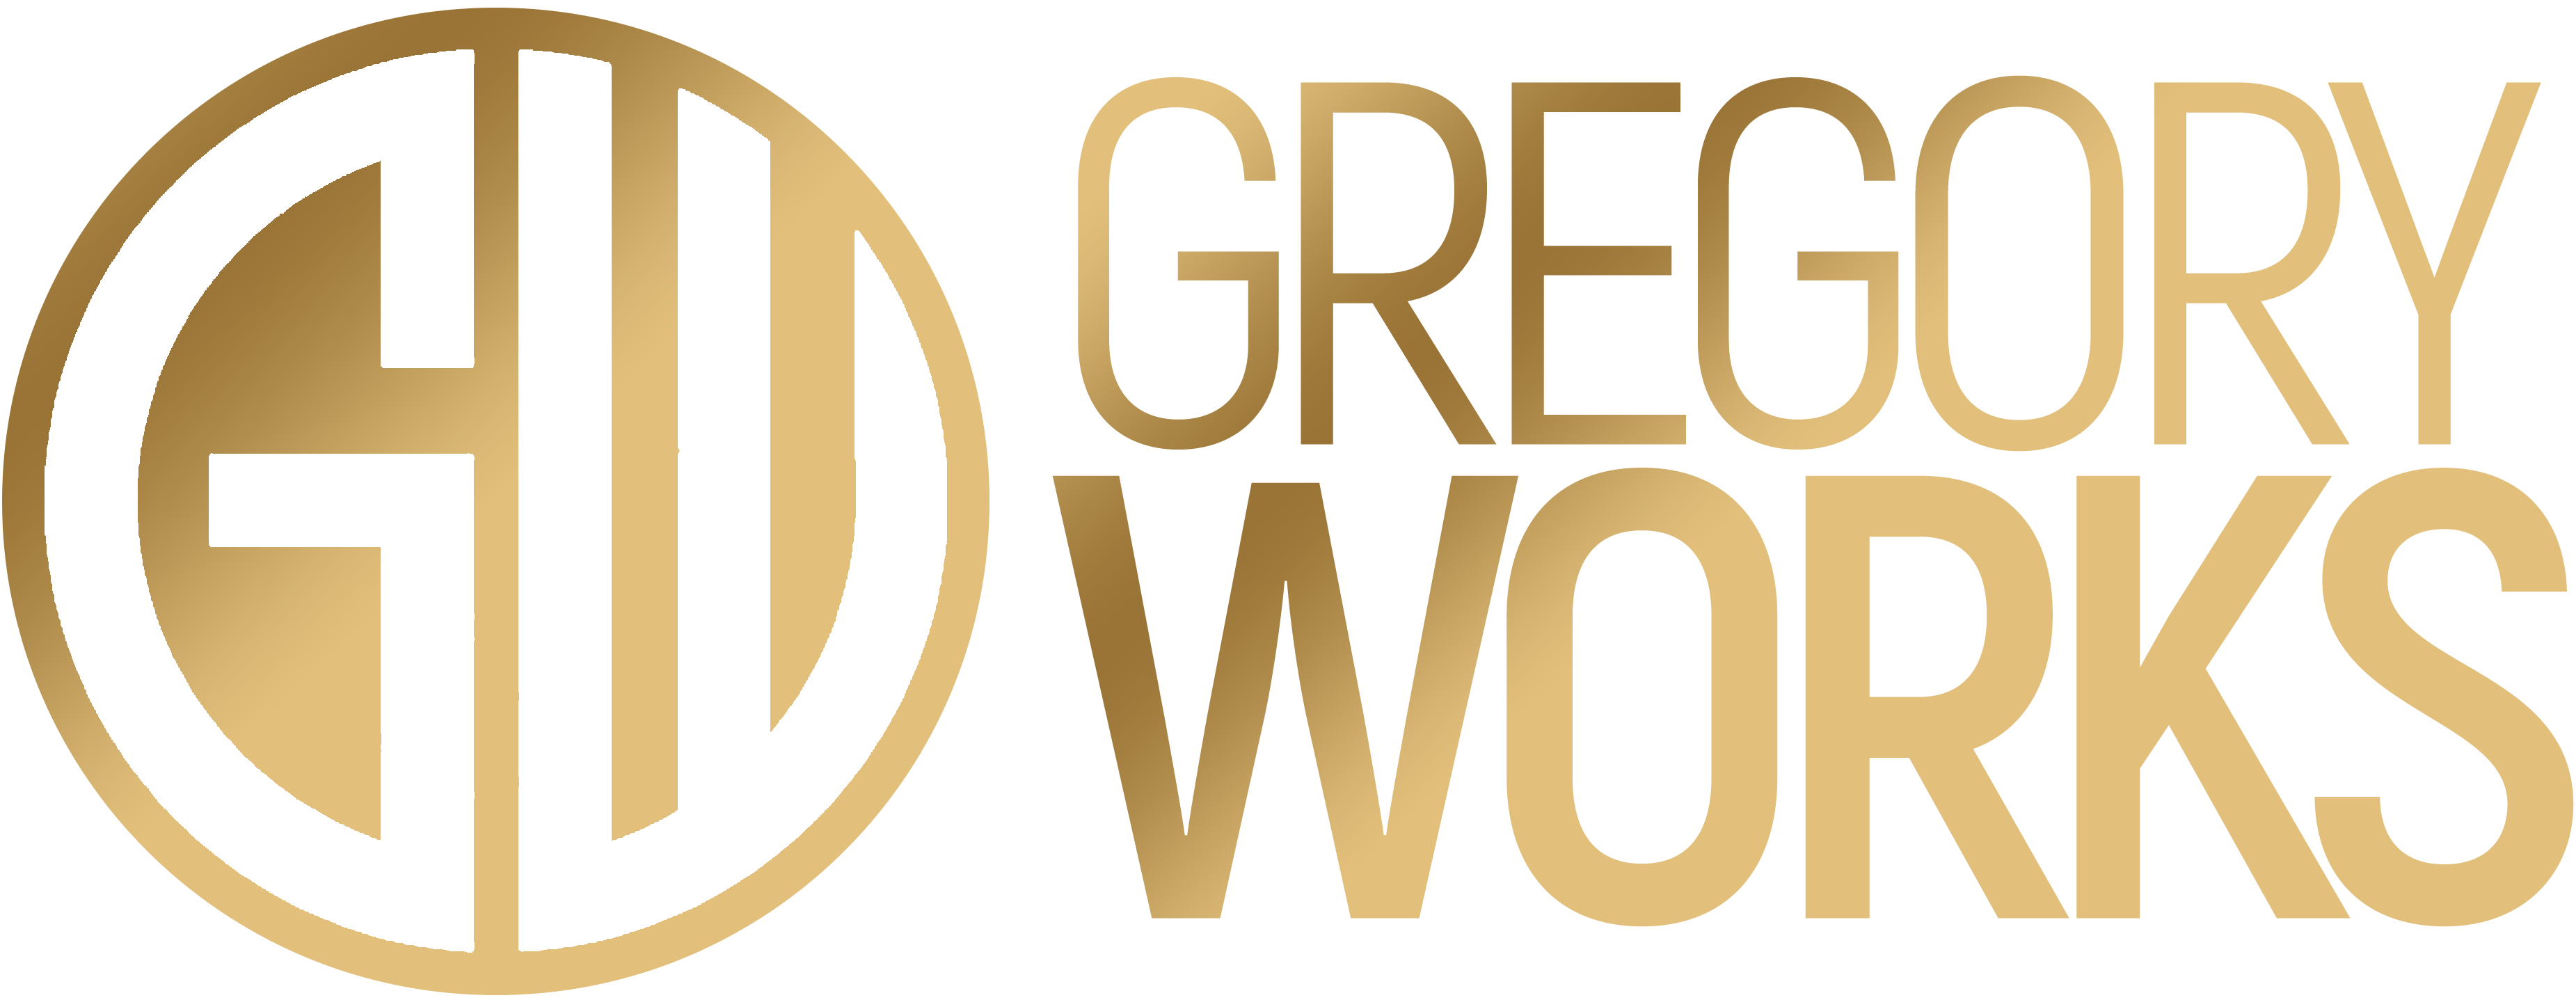 Gregory Works